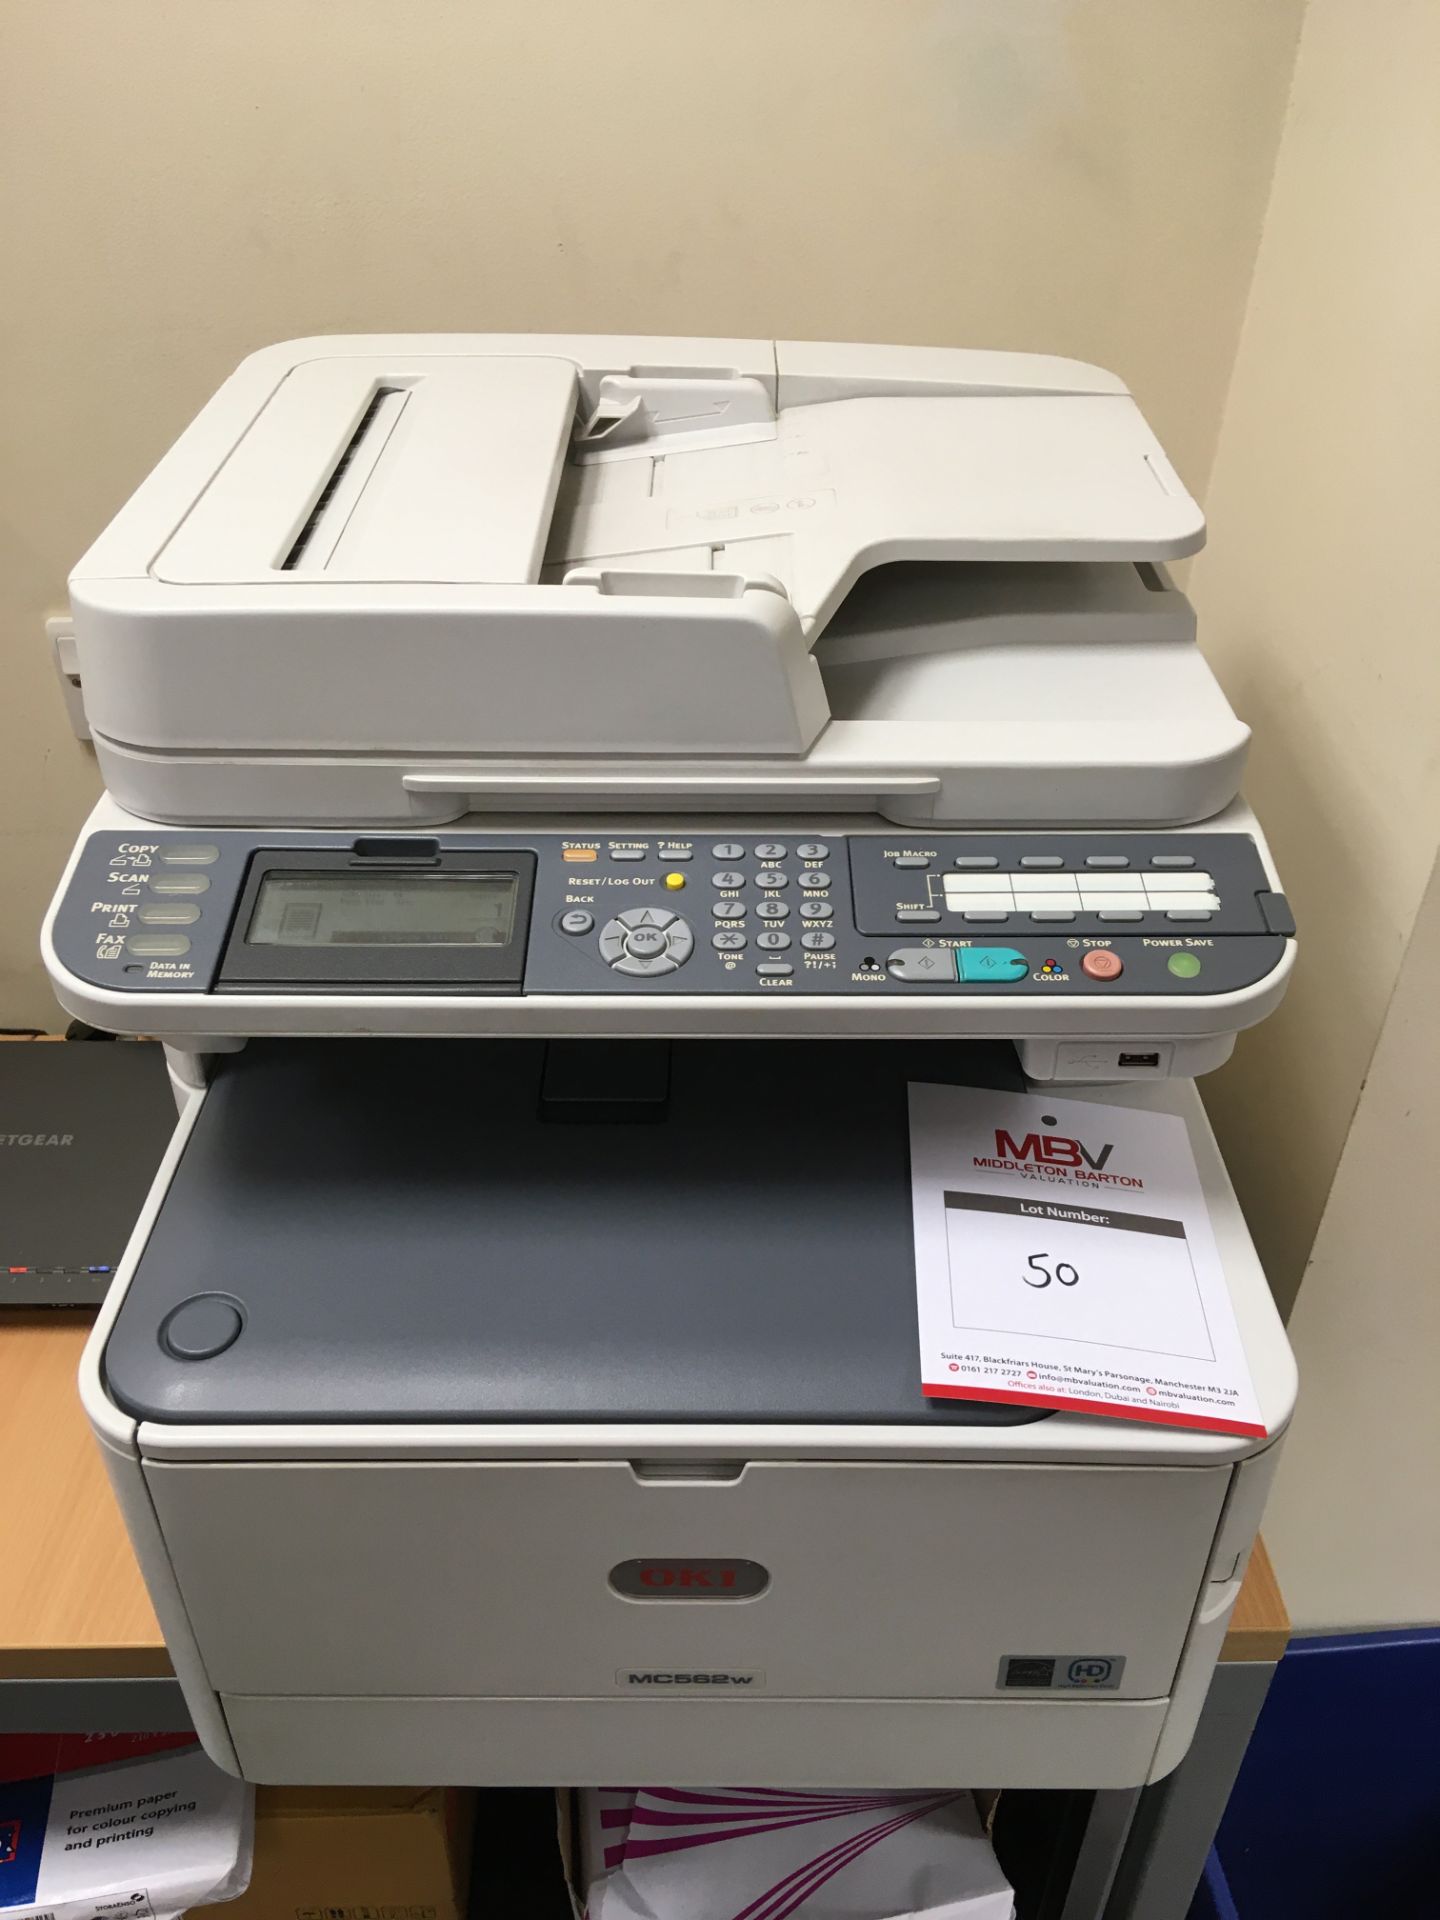 OKI MC562W Desk Top scanner, printer, copier